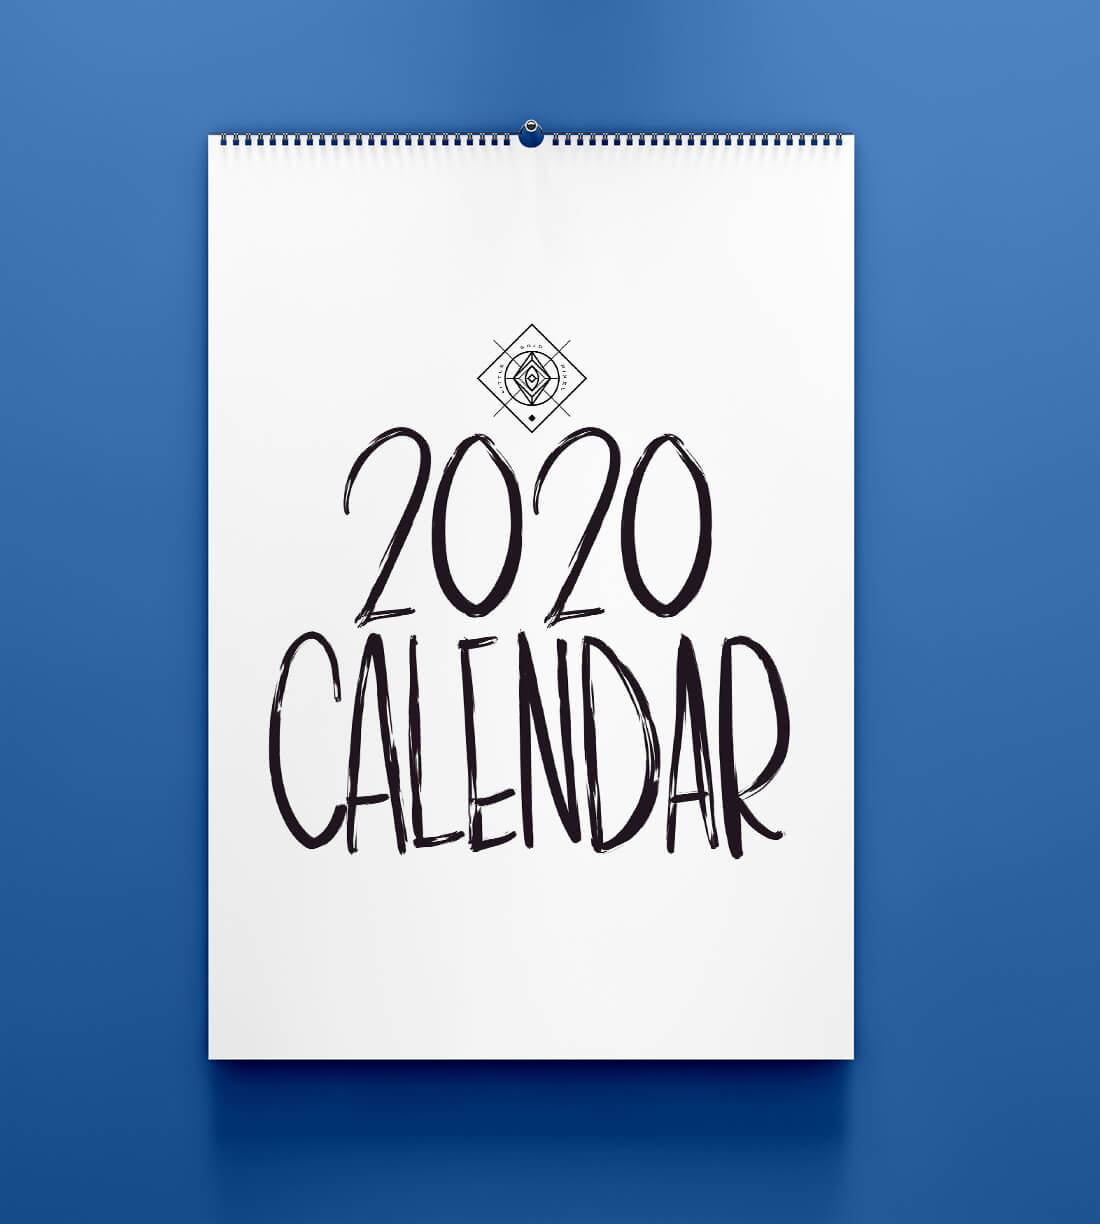 Free Printable 2020 Calendar • Little Gold Pixel #freebie #freeprintable #freecalendar #2020 #2020calendar #desktopcalendar #handlettering